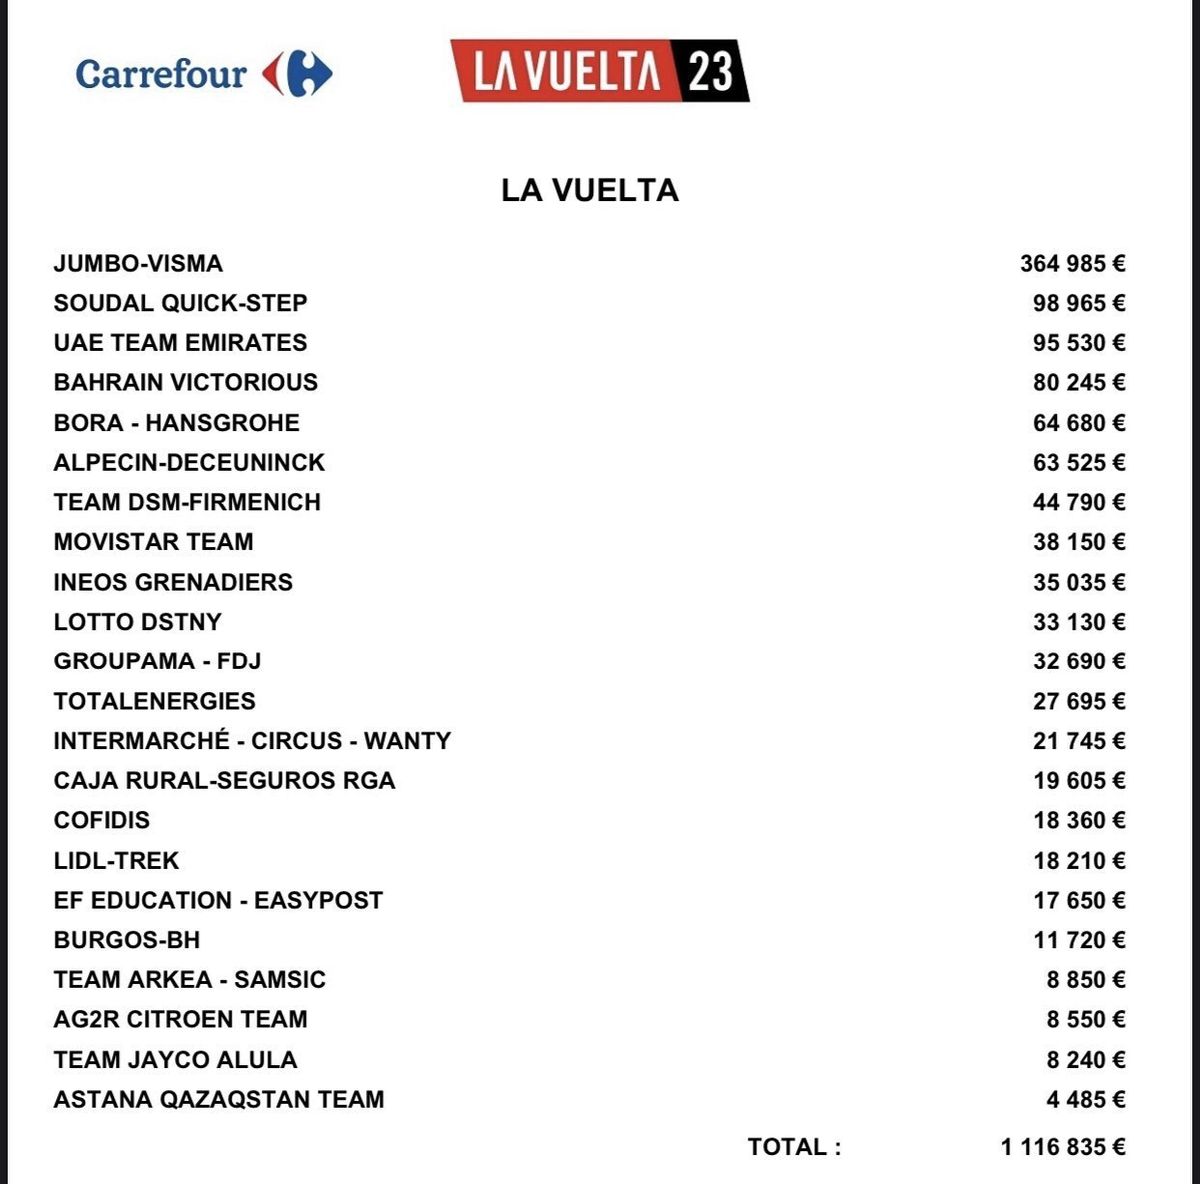 Jumbo-Visma remporte un tiers du prix en argent de la Vuelta a España 2023